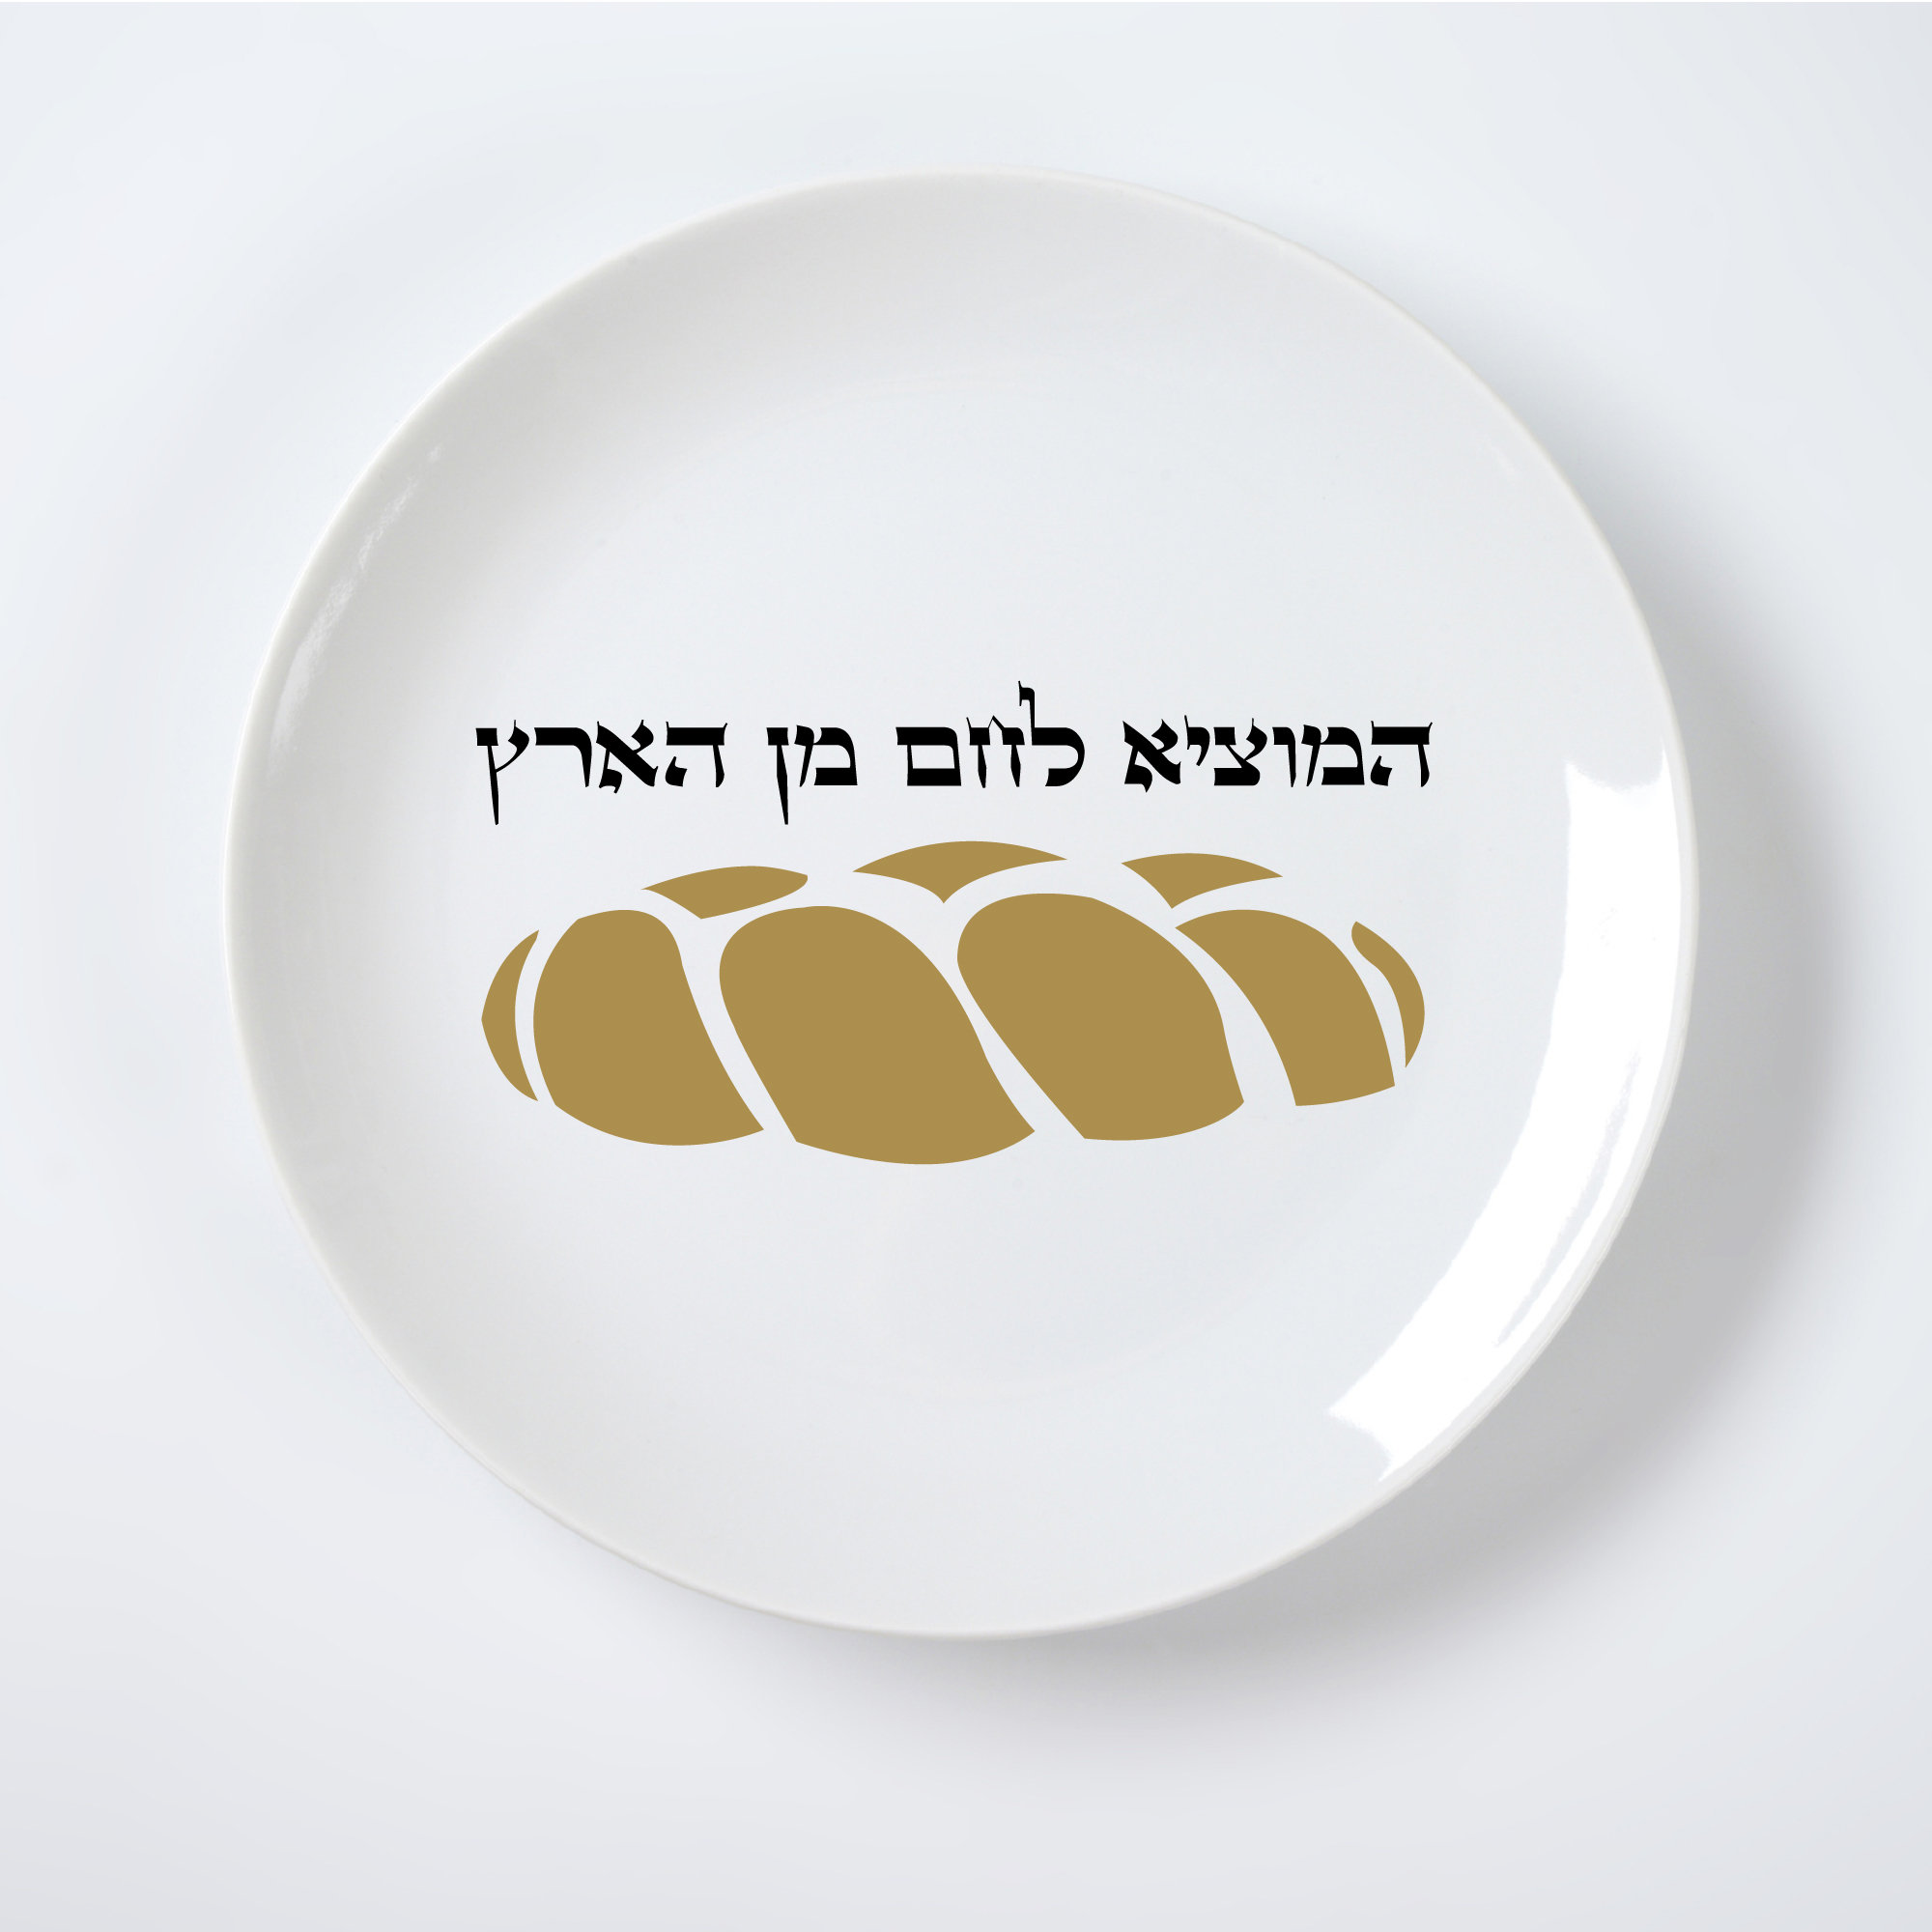 Cover for SHABBAT Hot Plate, Art Judaica, Platta Cover, Plata Cover, Shabbos  Save Warming Cover, Worming Plate Cover 